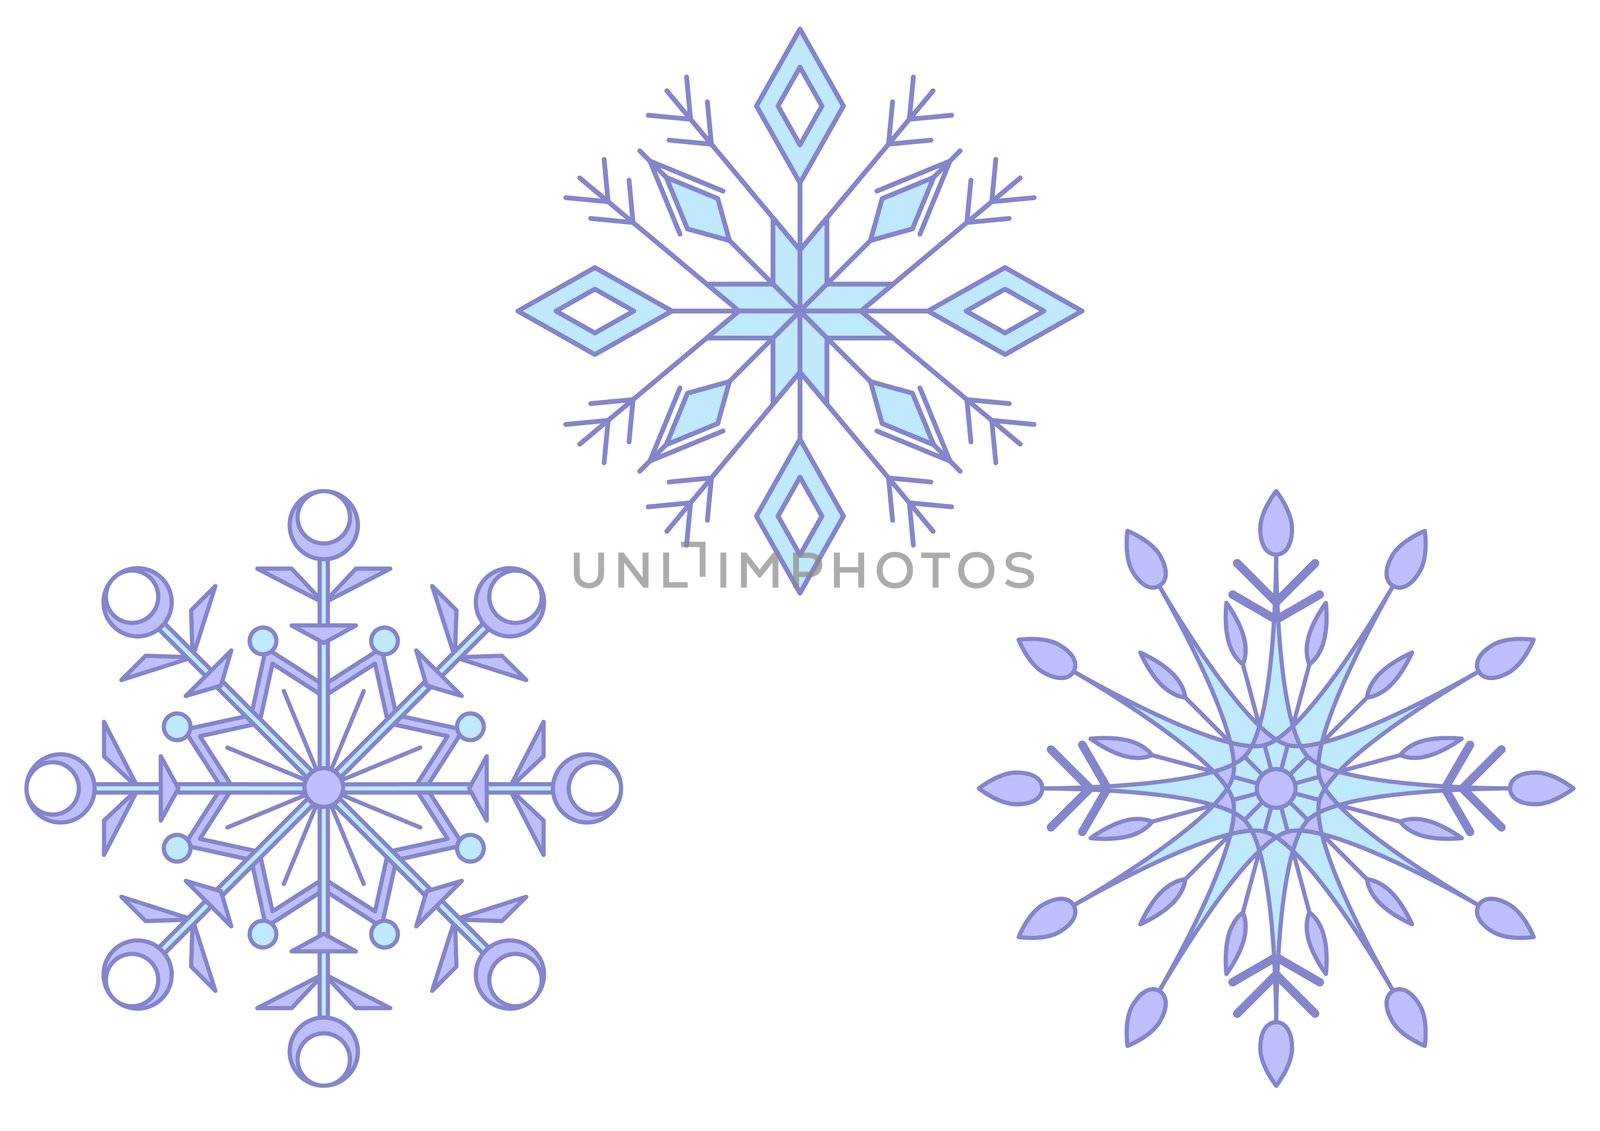 Snowflakes by alexcoolok